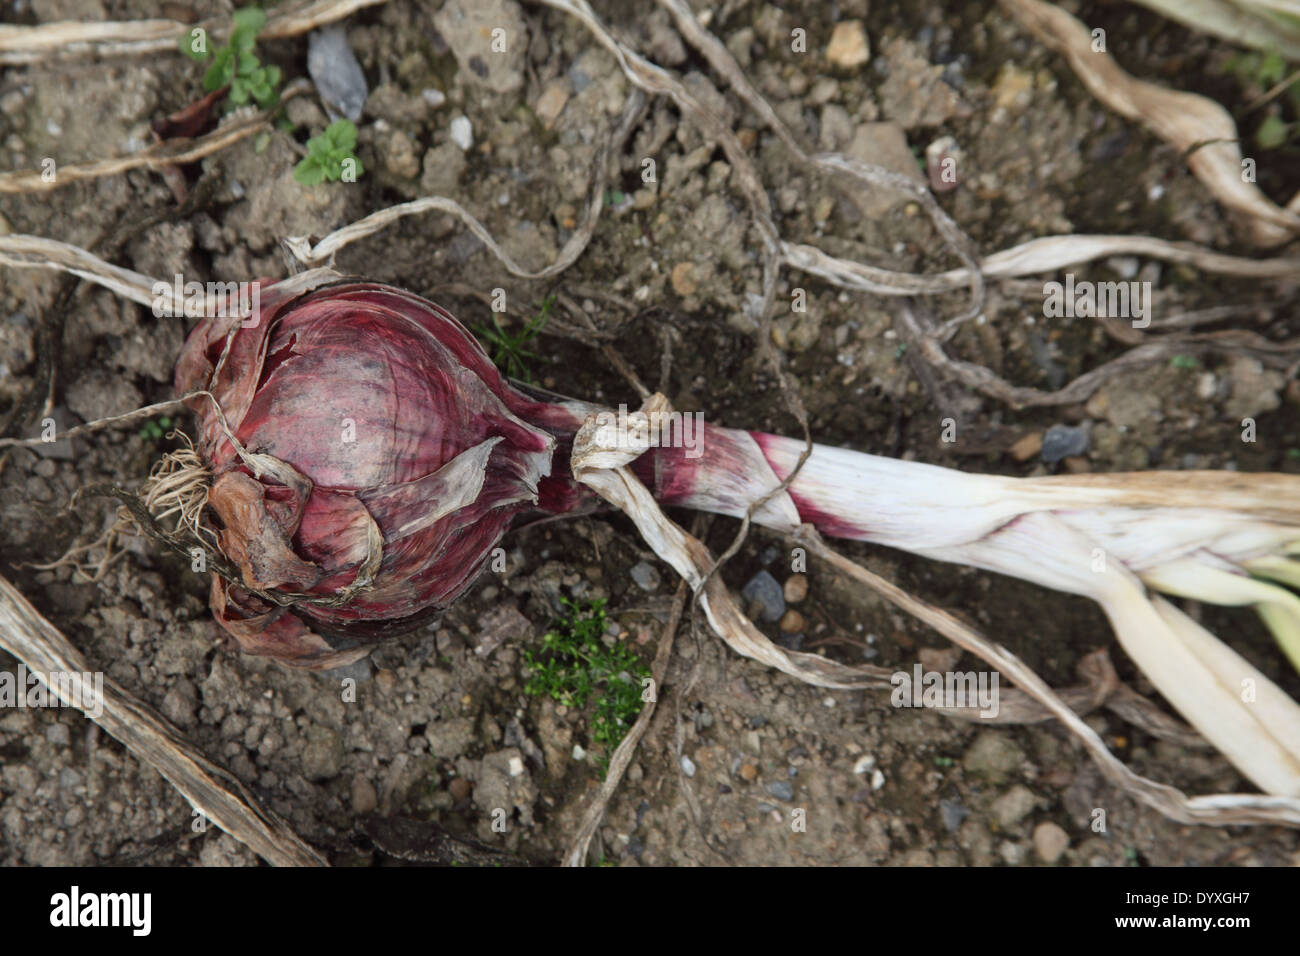 Allium cepa 'Red Arrow' Onion close up of mature bulb Stock Photo